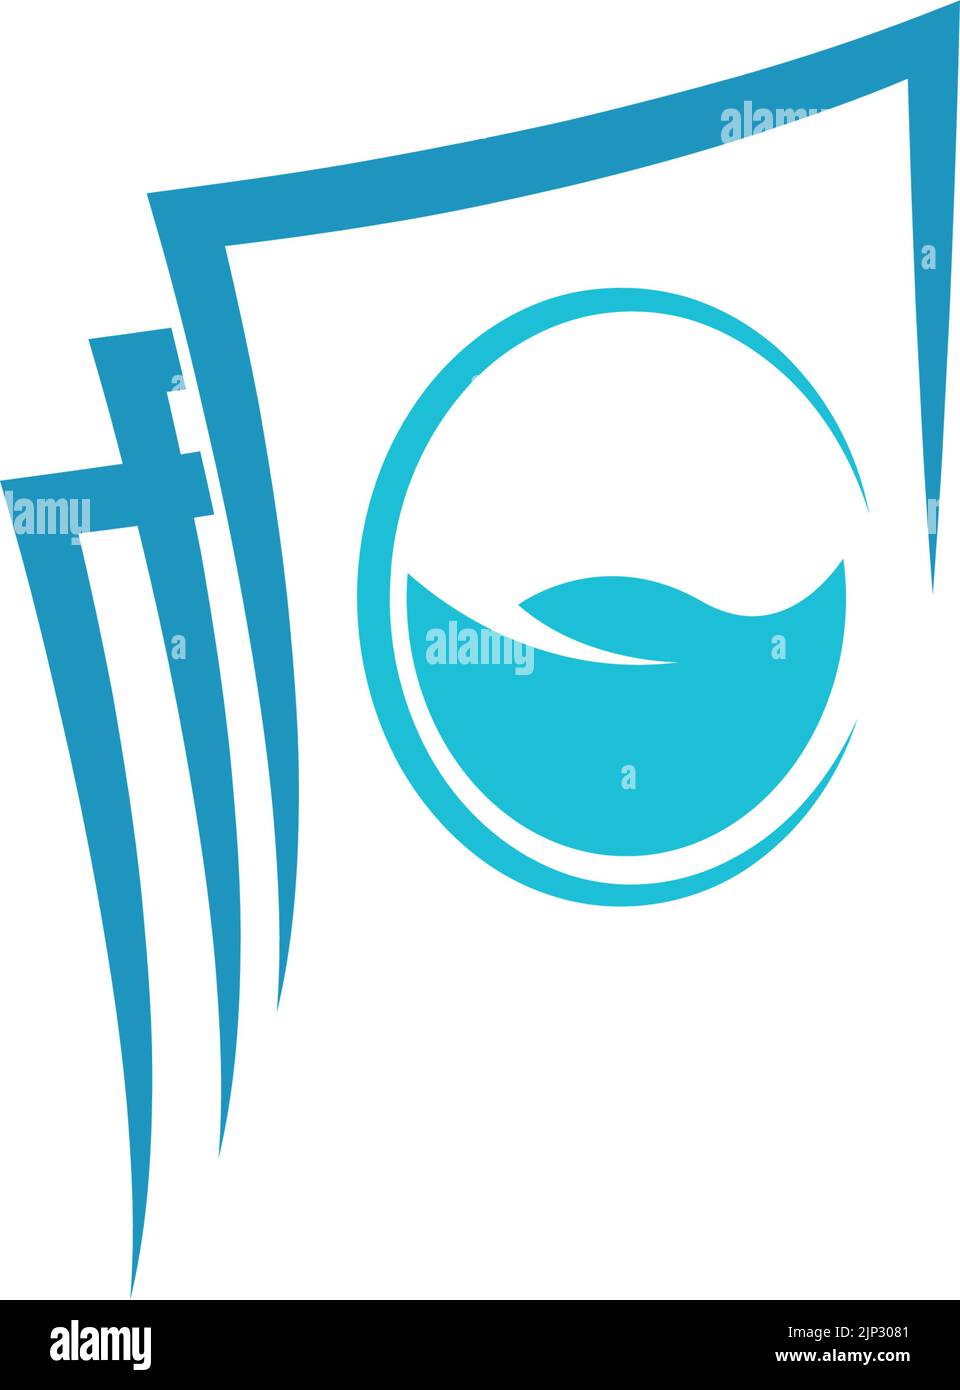 Laundry, clothes washing icon logo illustration t Stock Vector